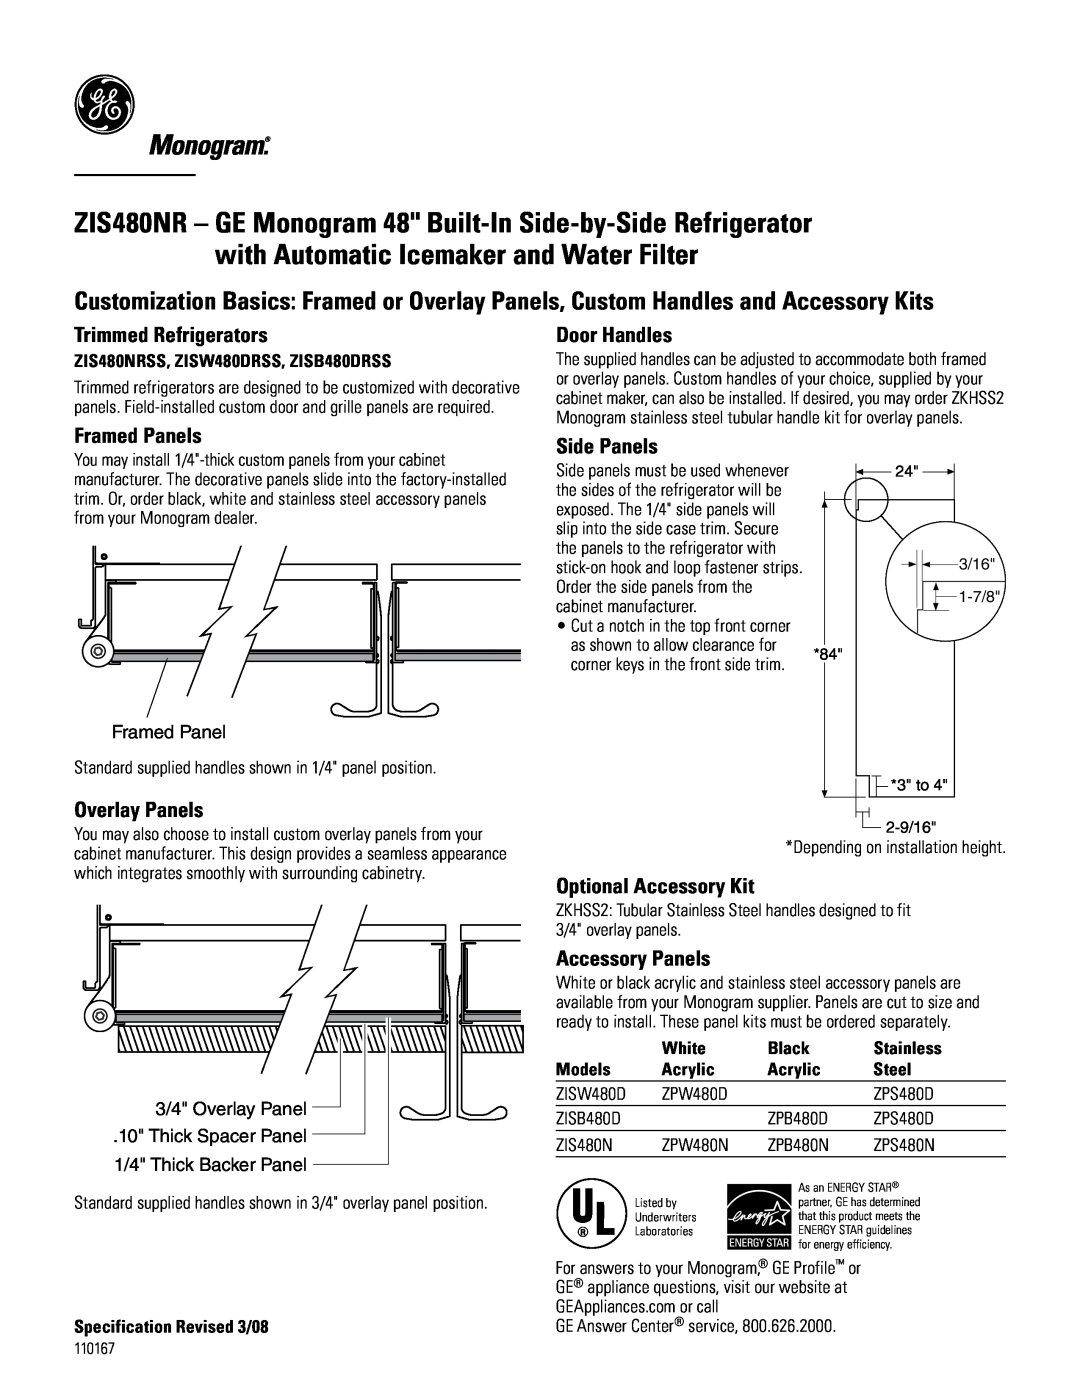 GE Monogram ZIS480NR Trimmed Refrigerators, Framed Panels, Overlay Panels, Door Handles, Side Panels, Accessory Panels 